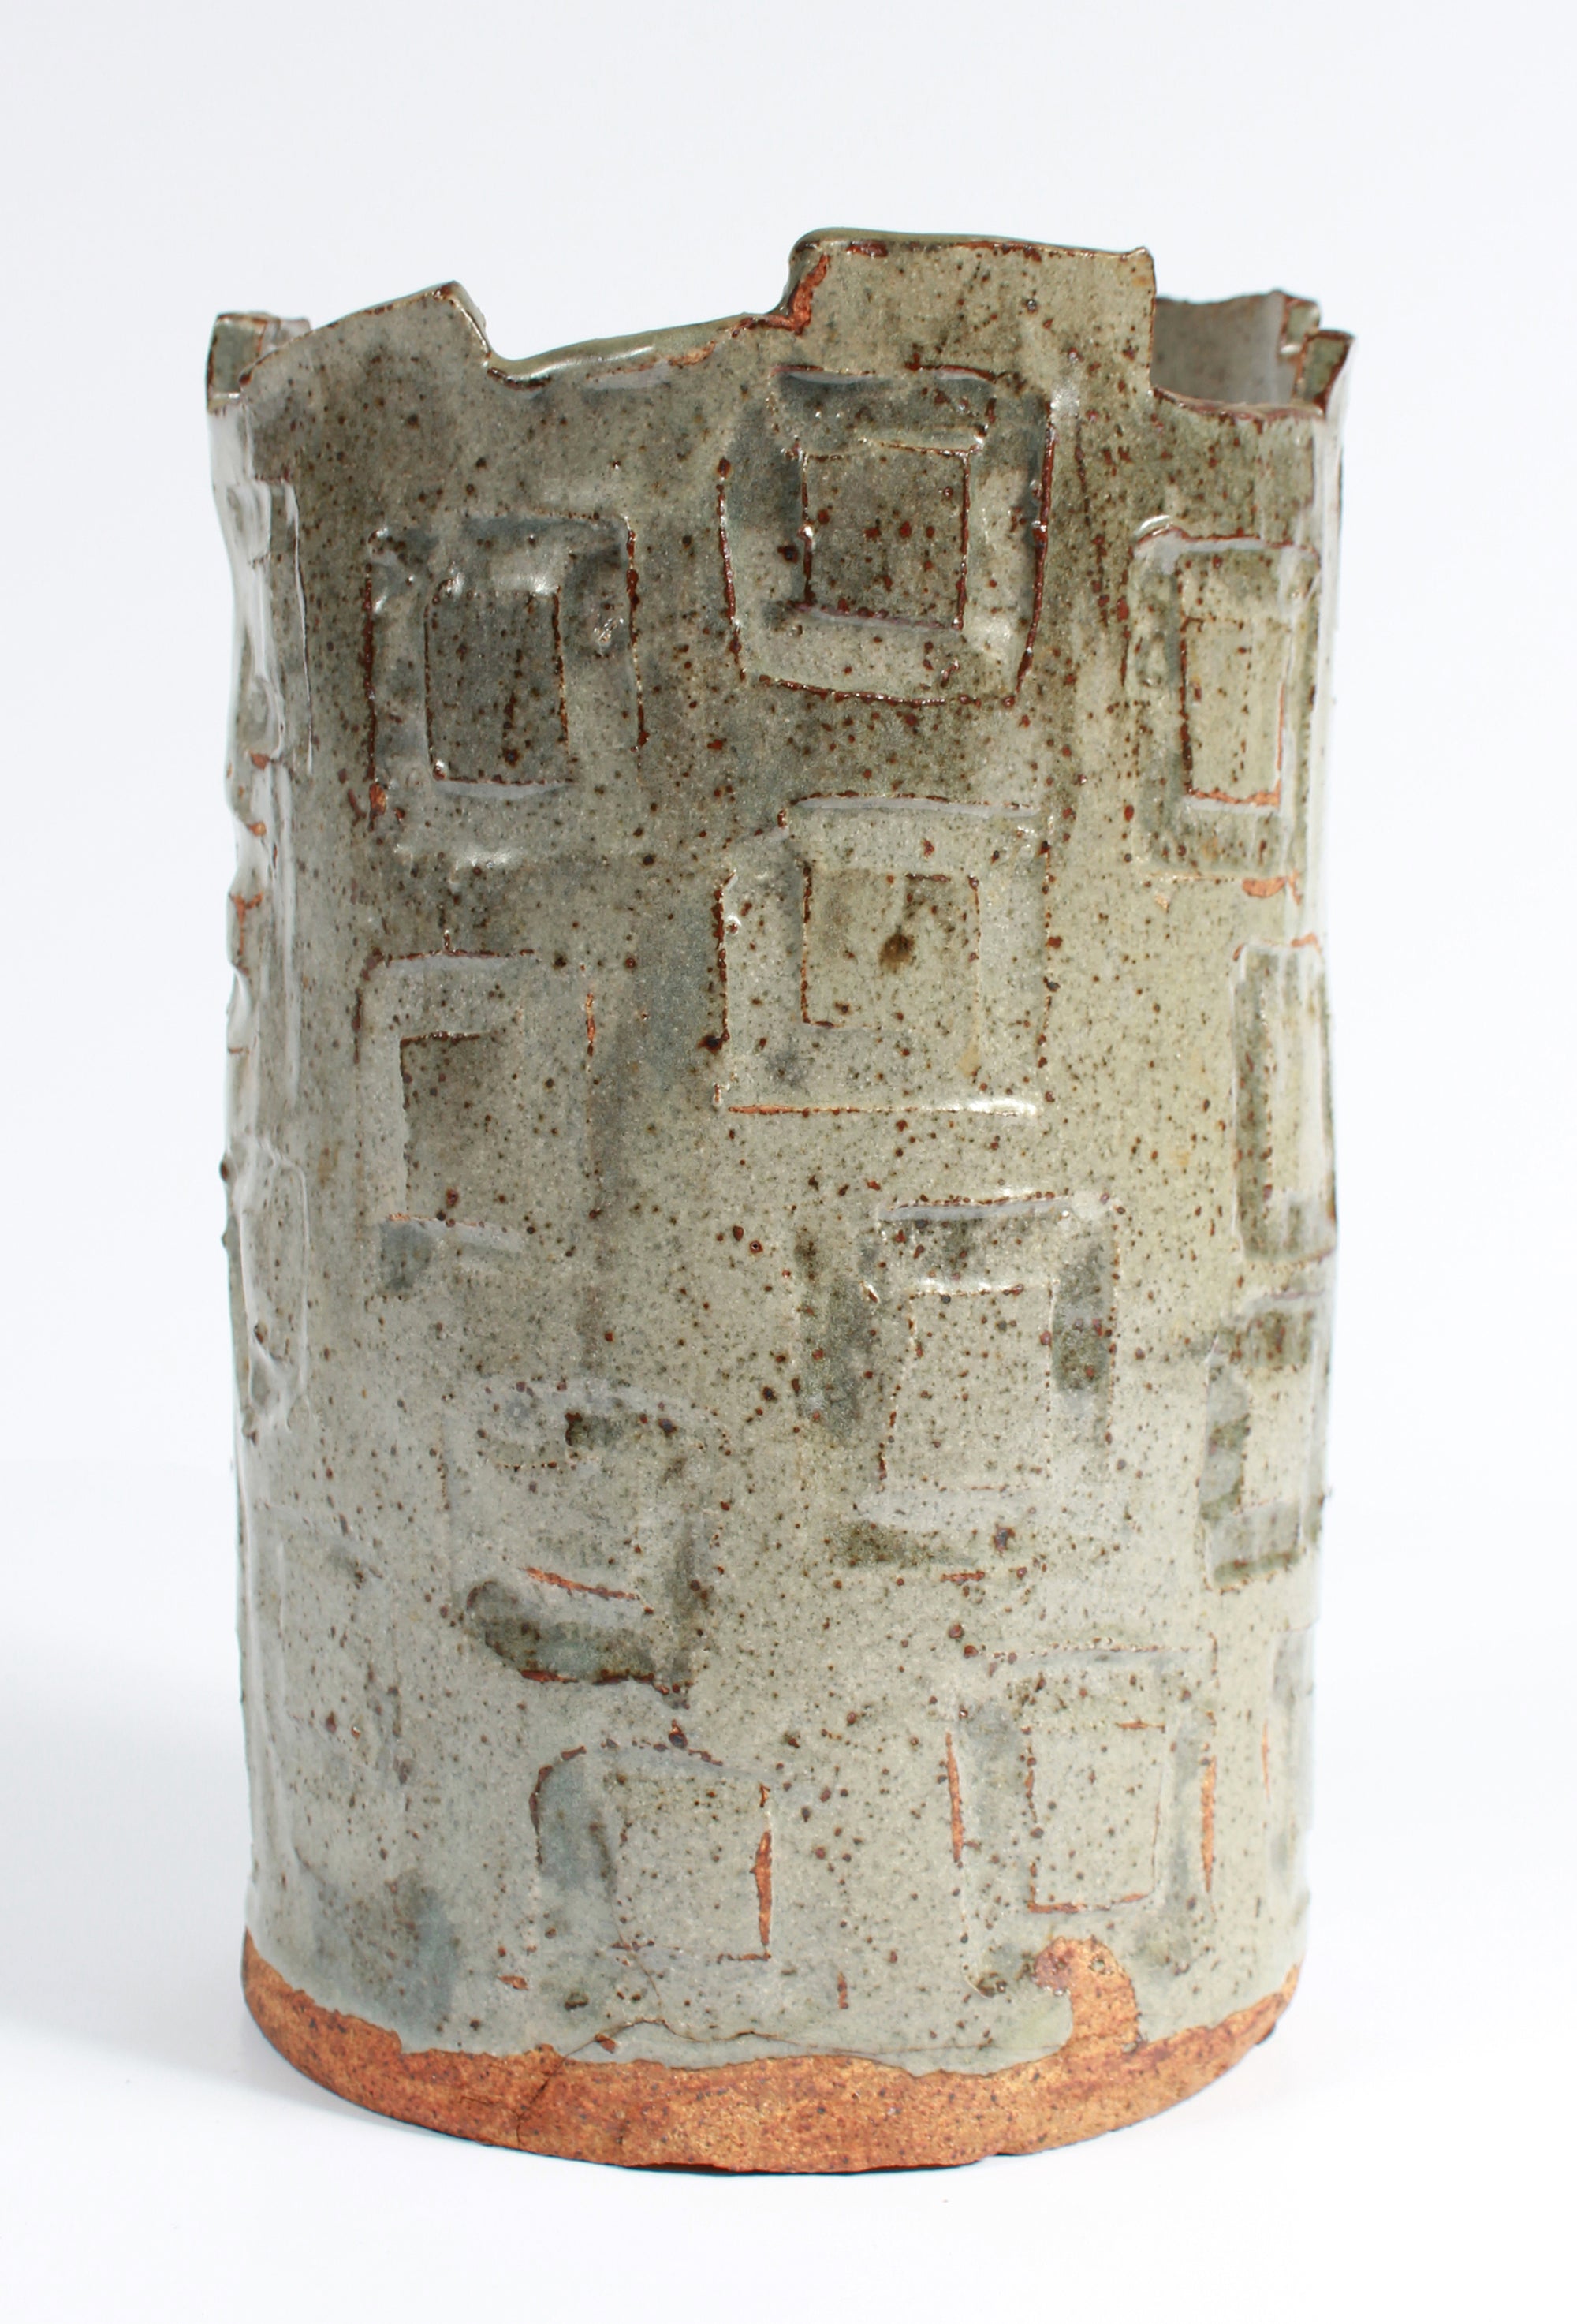 Upright Vessel with Geometric Pattern <br>1987 Stone Ground Ceramic <br><br>#A7532